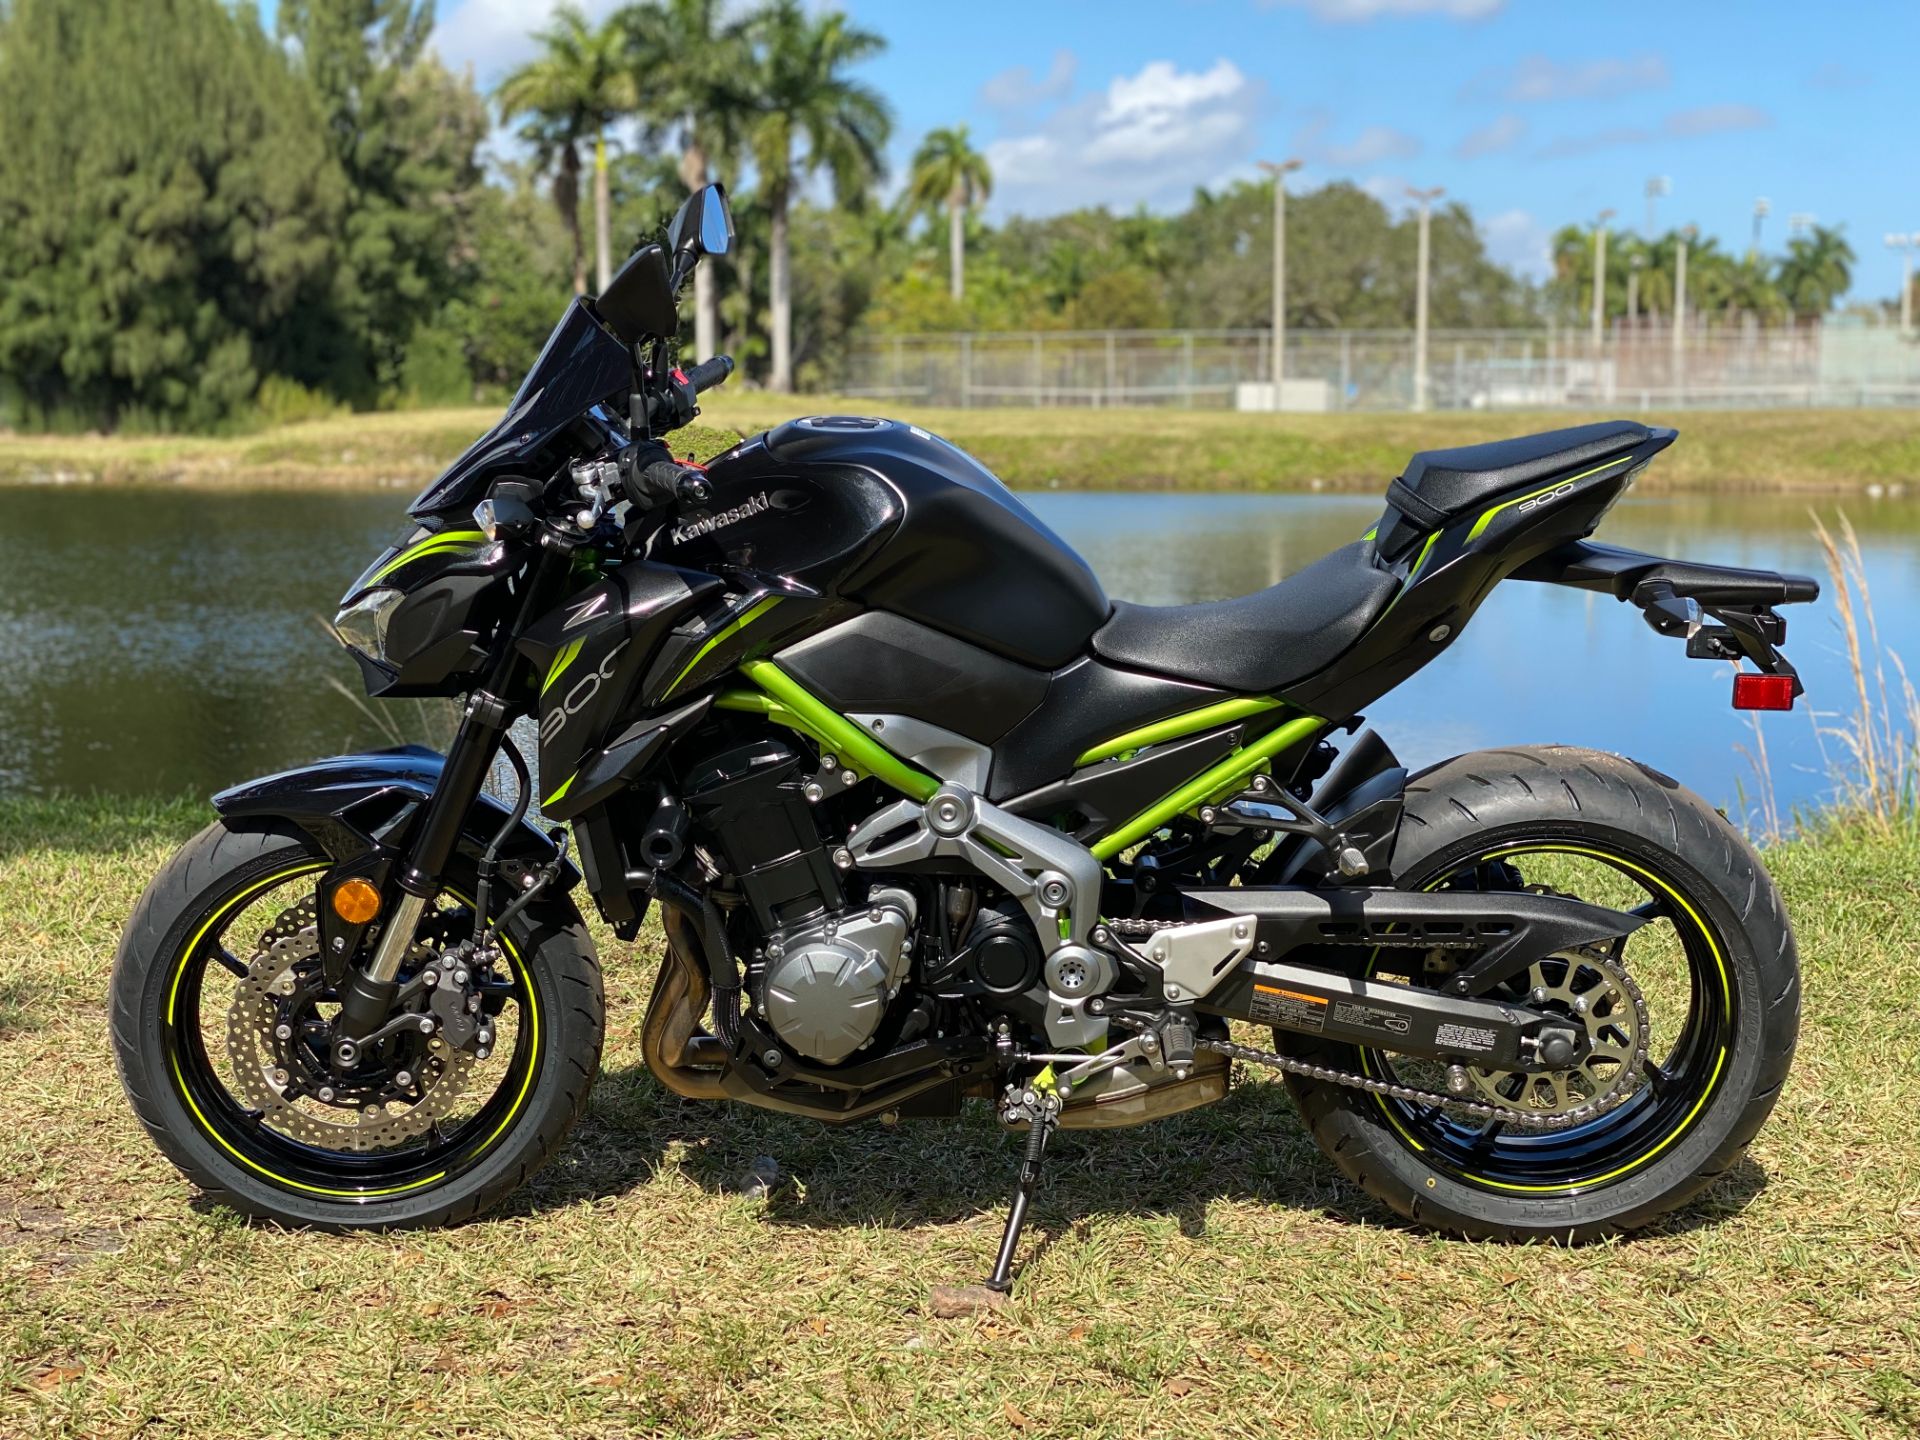 2019 Kawasaki Z900 in North Miami Beach, Florida - Photo 18